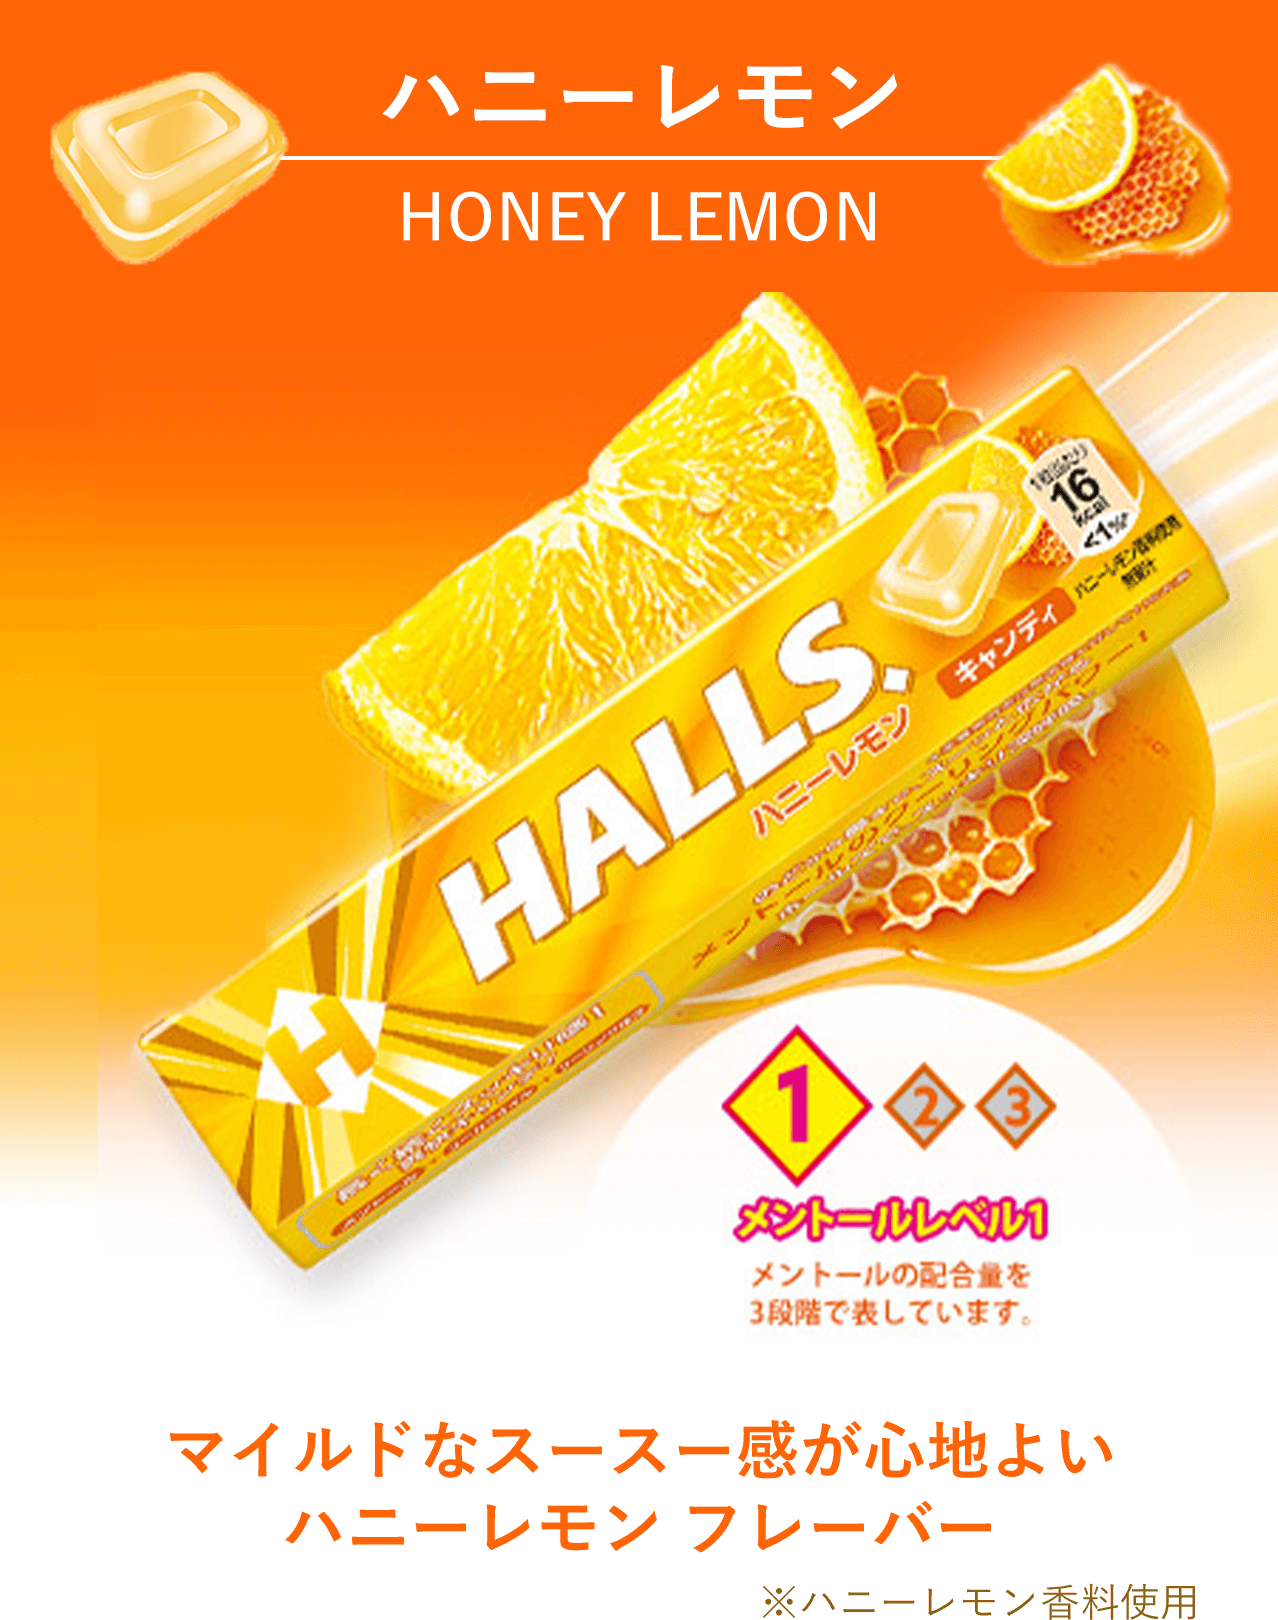 HALLS®ハニーレモン